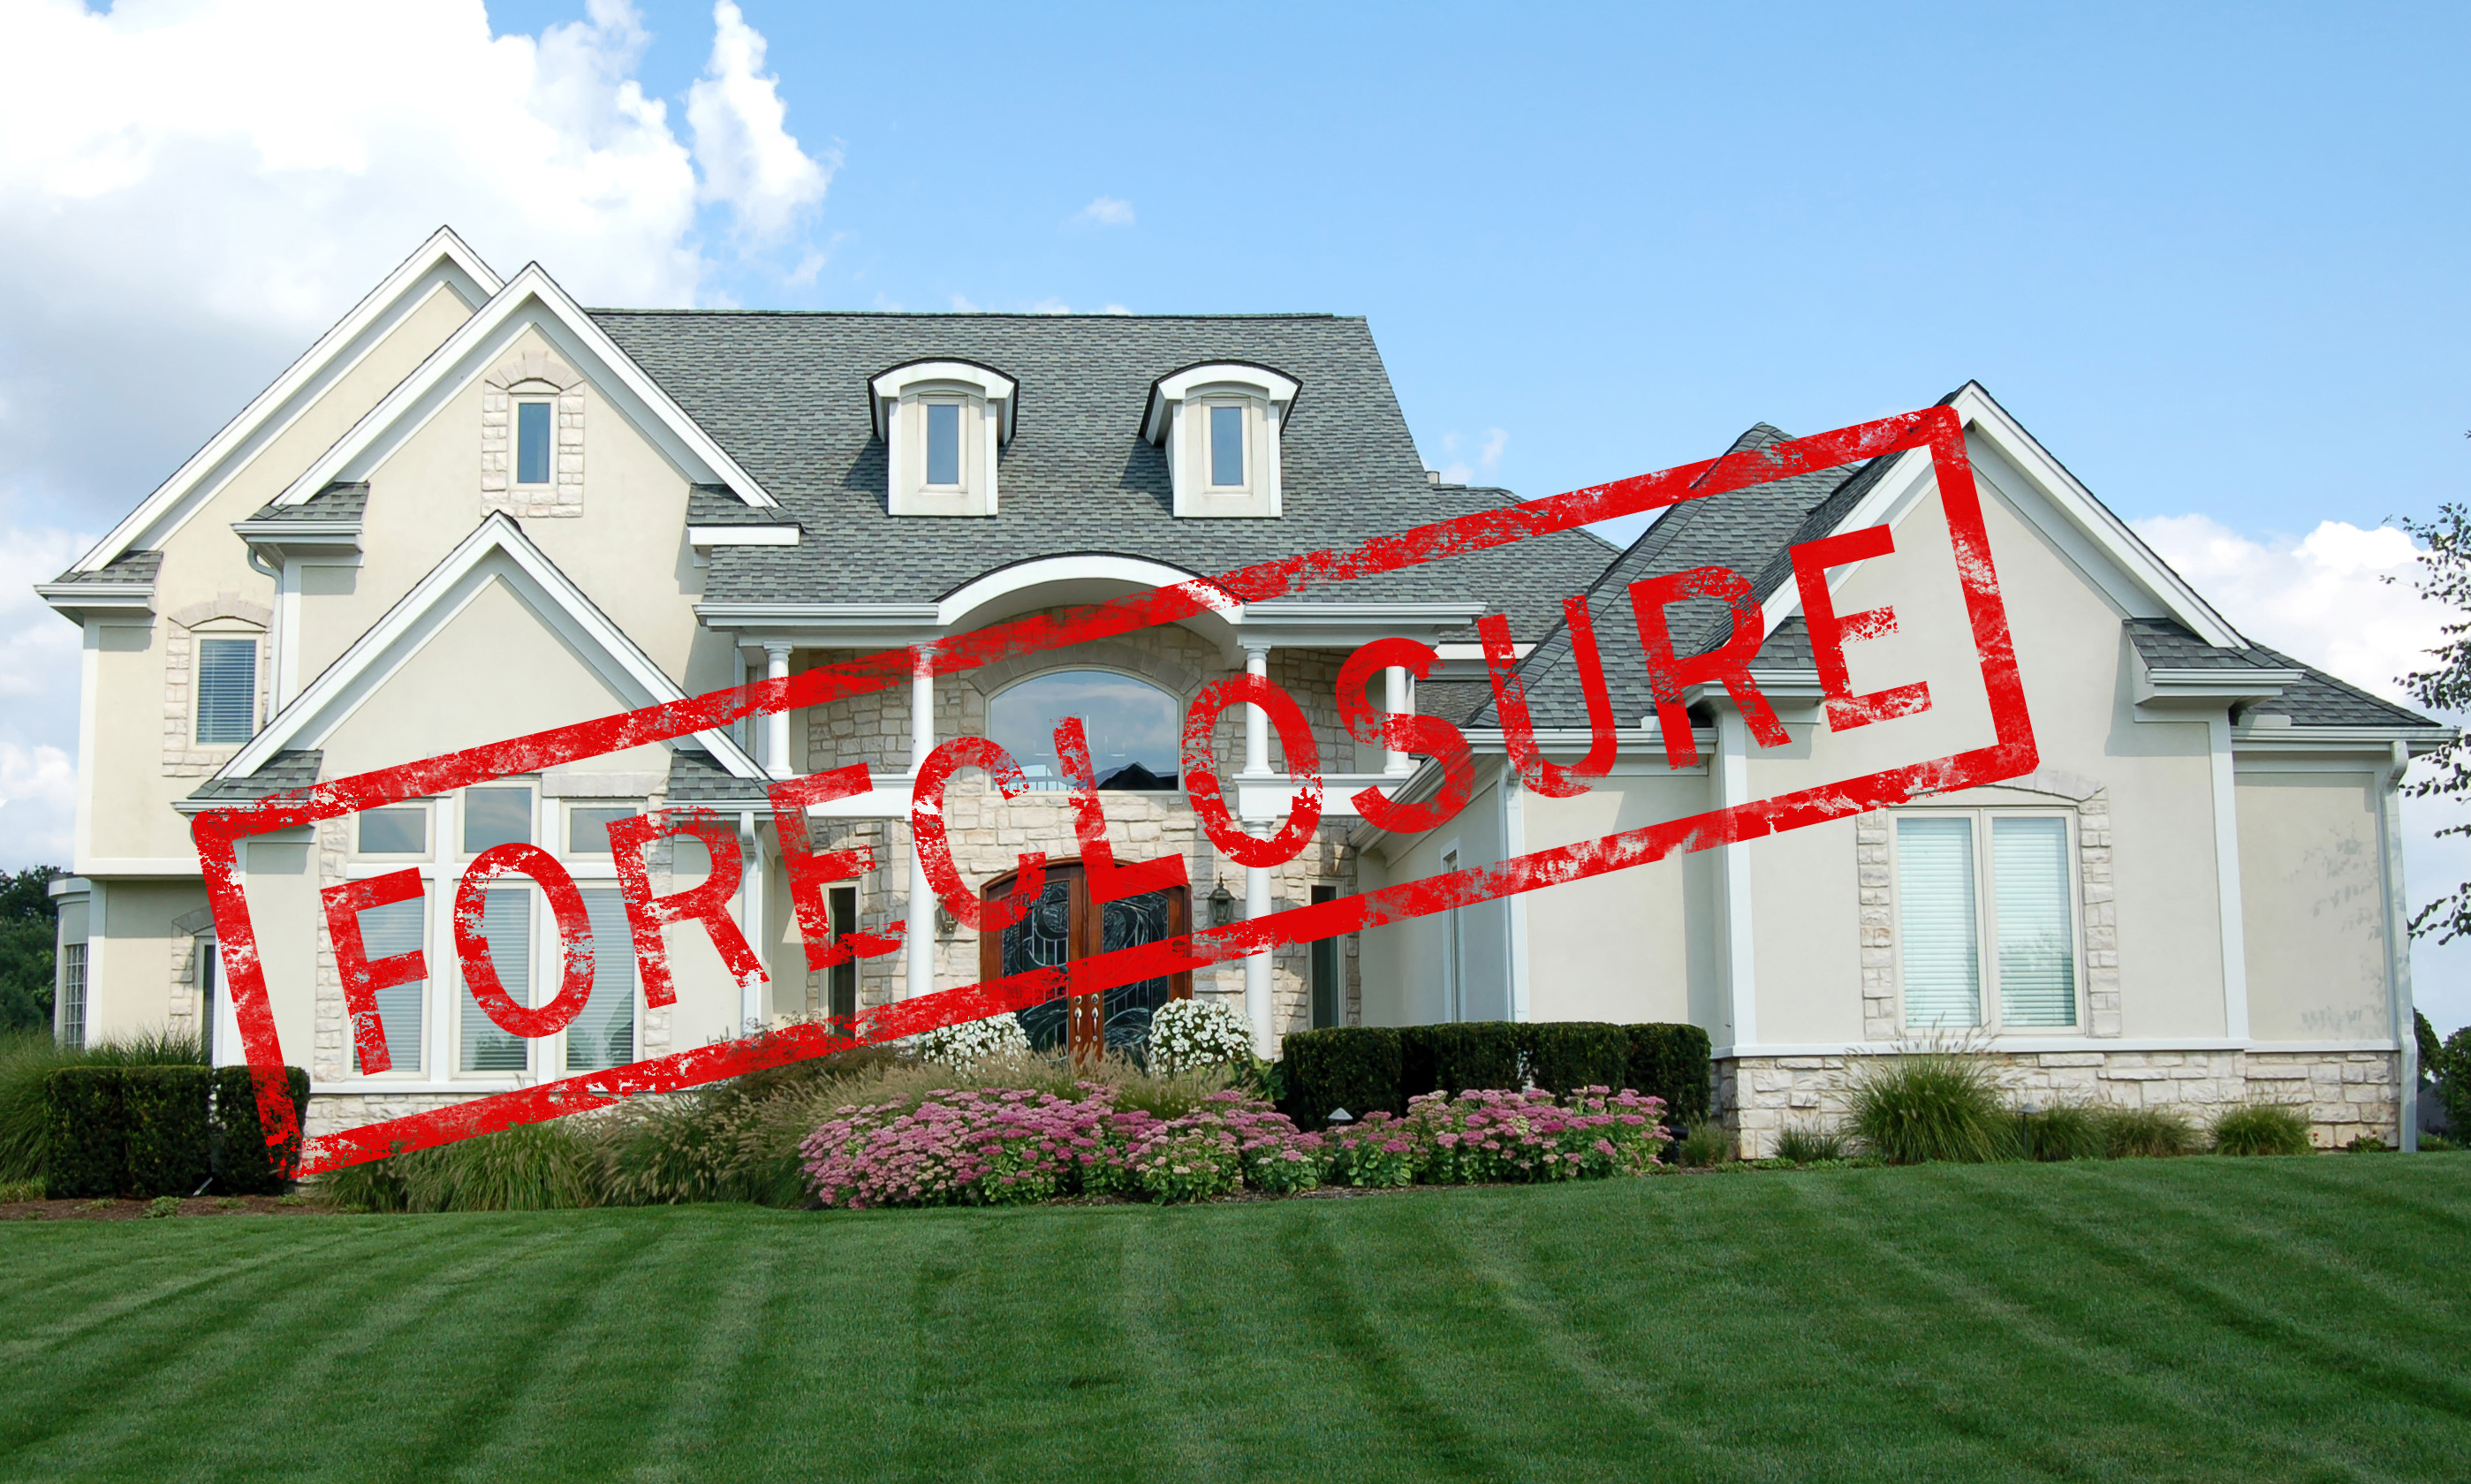 Call Nordquist Appraisal LLC to order appraisals regarding Allegheny foreclosures